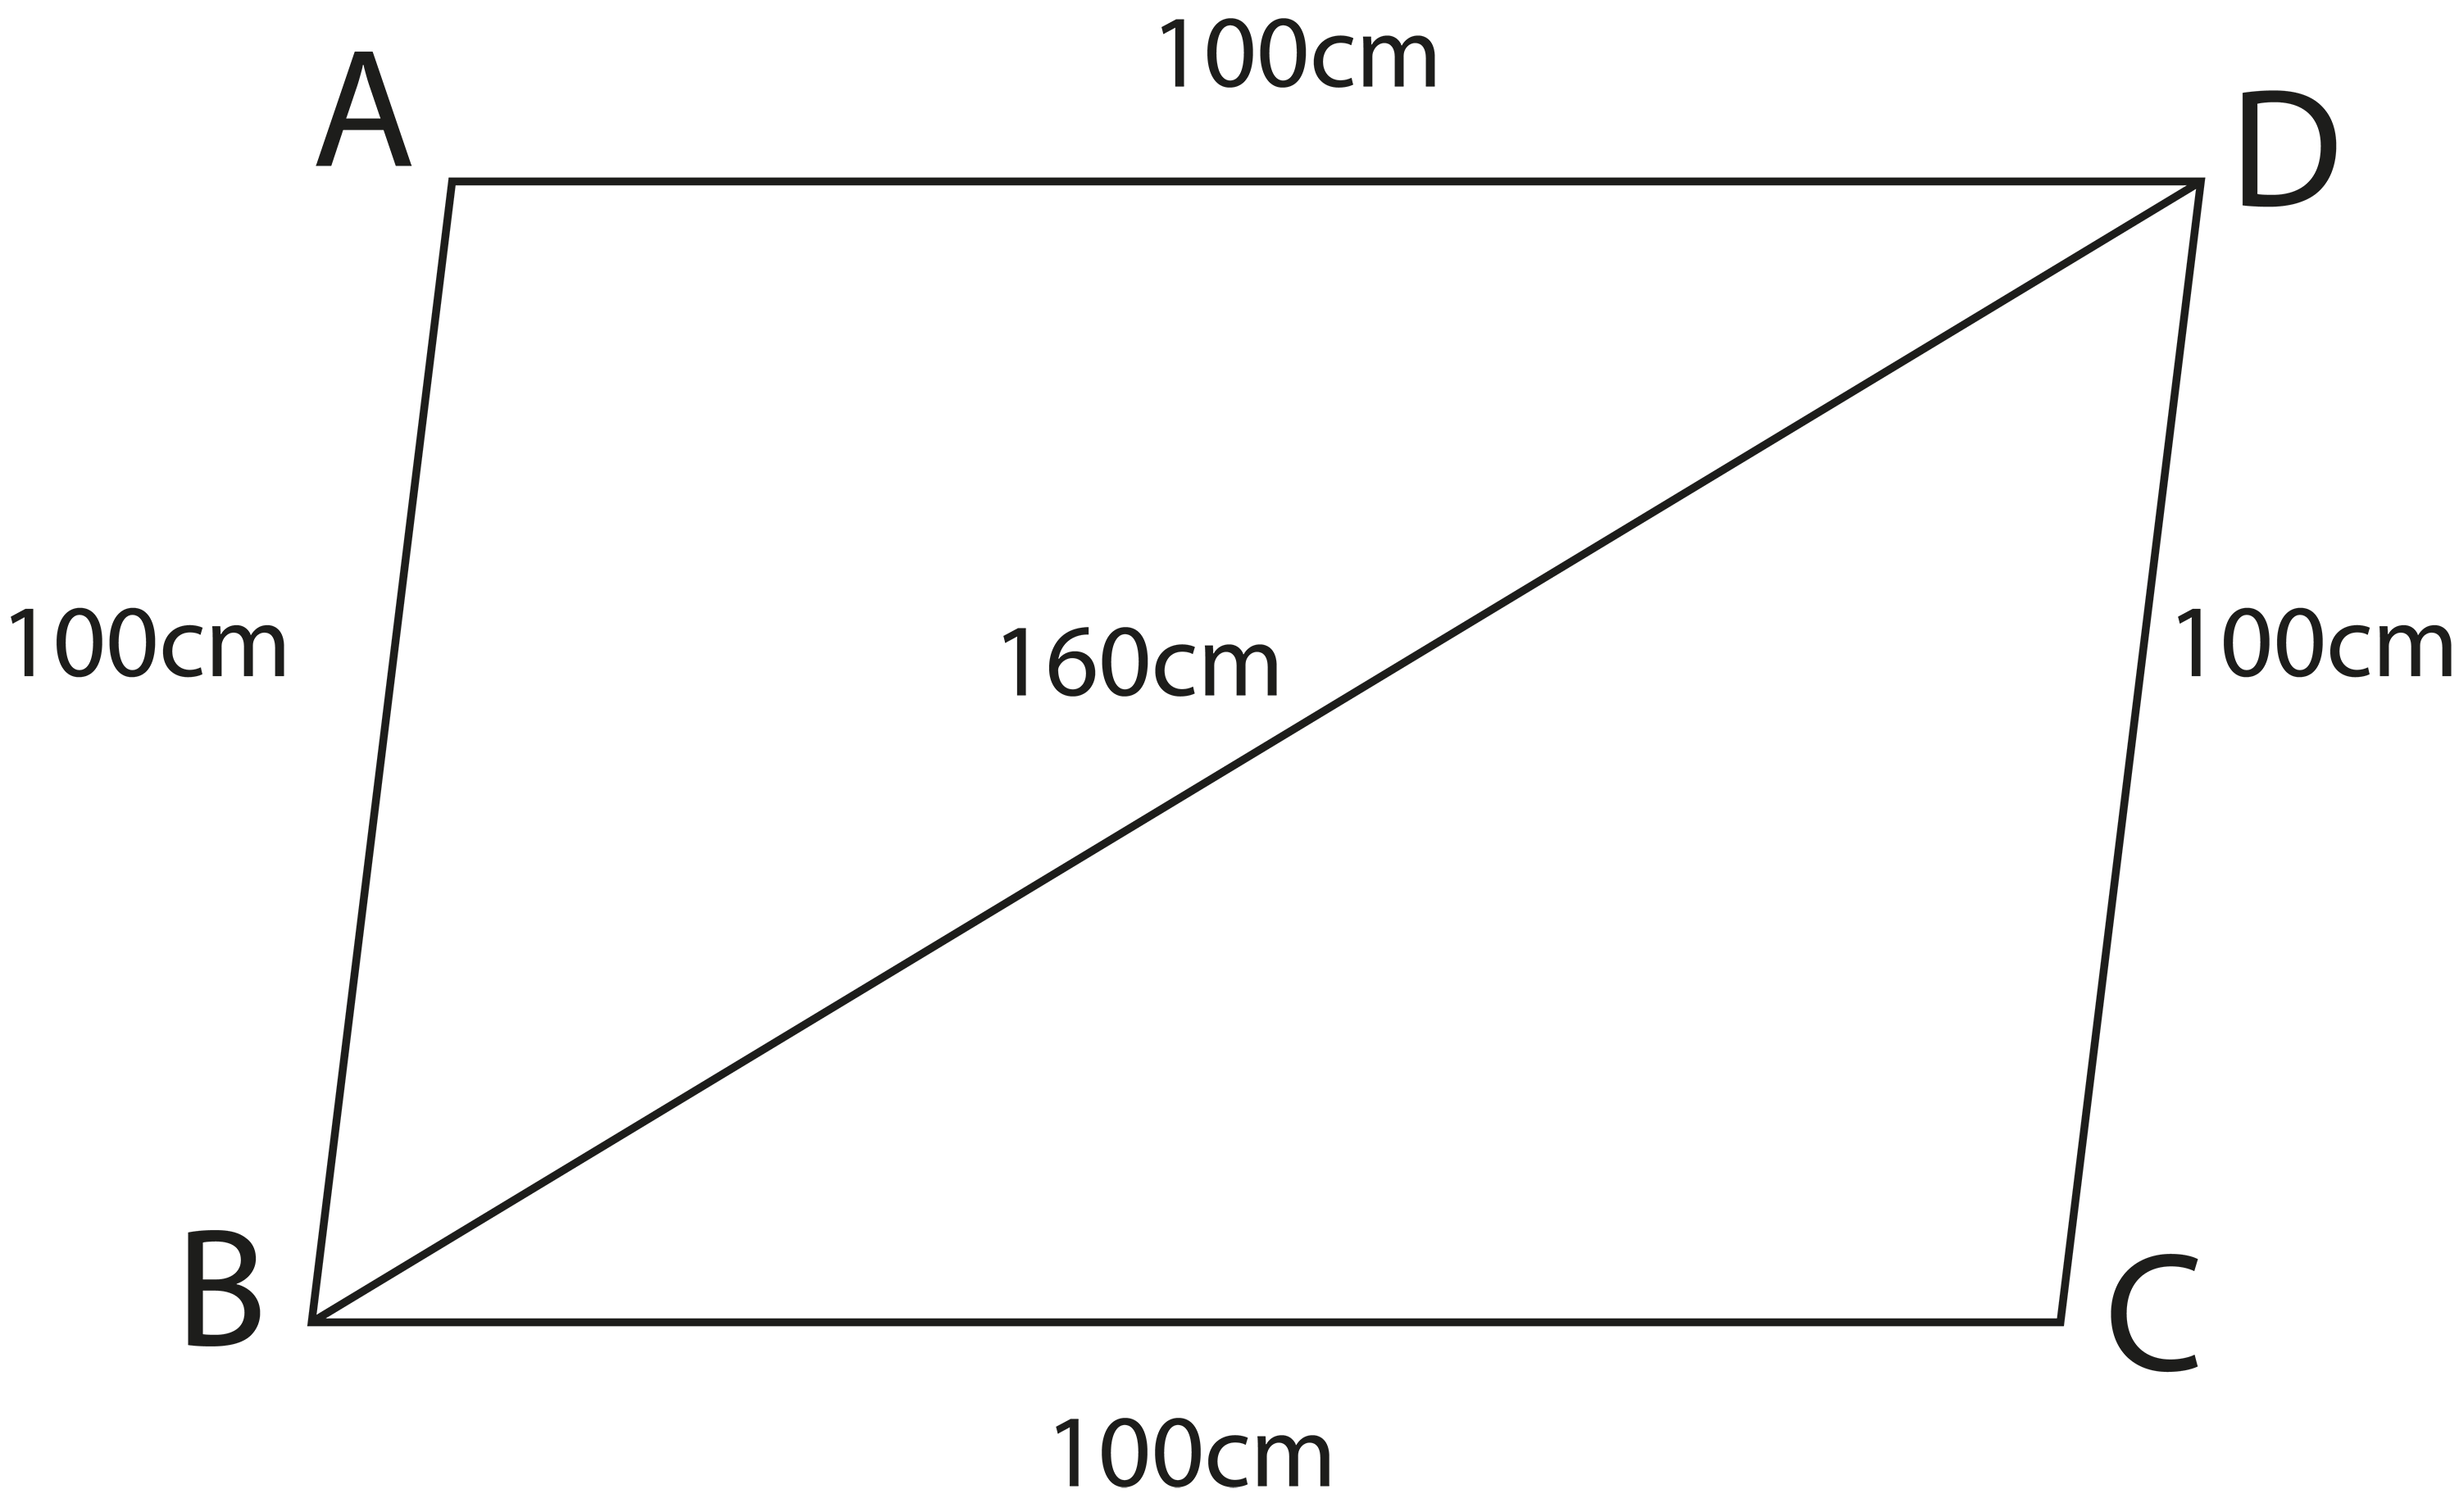 Area of Quadrilateral using Heron’s Formula